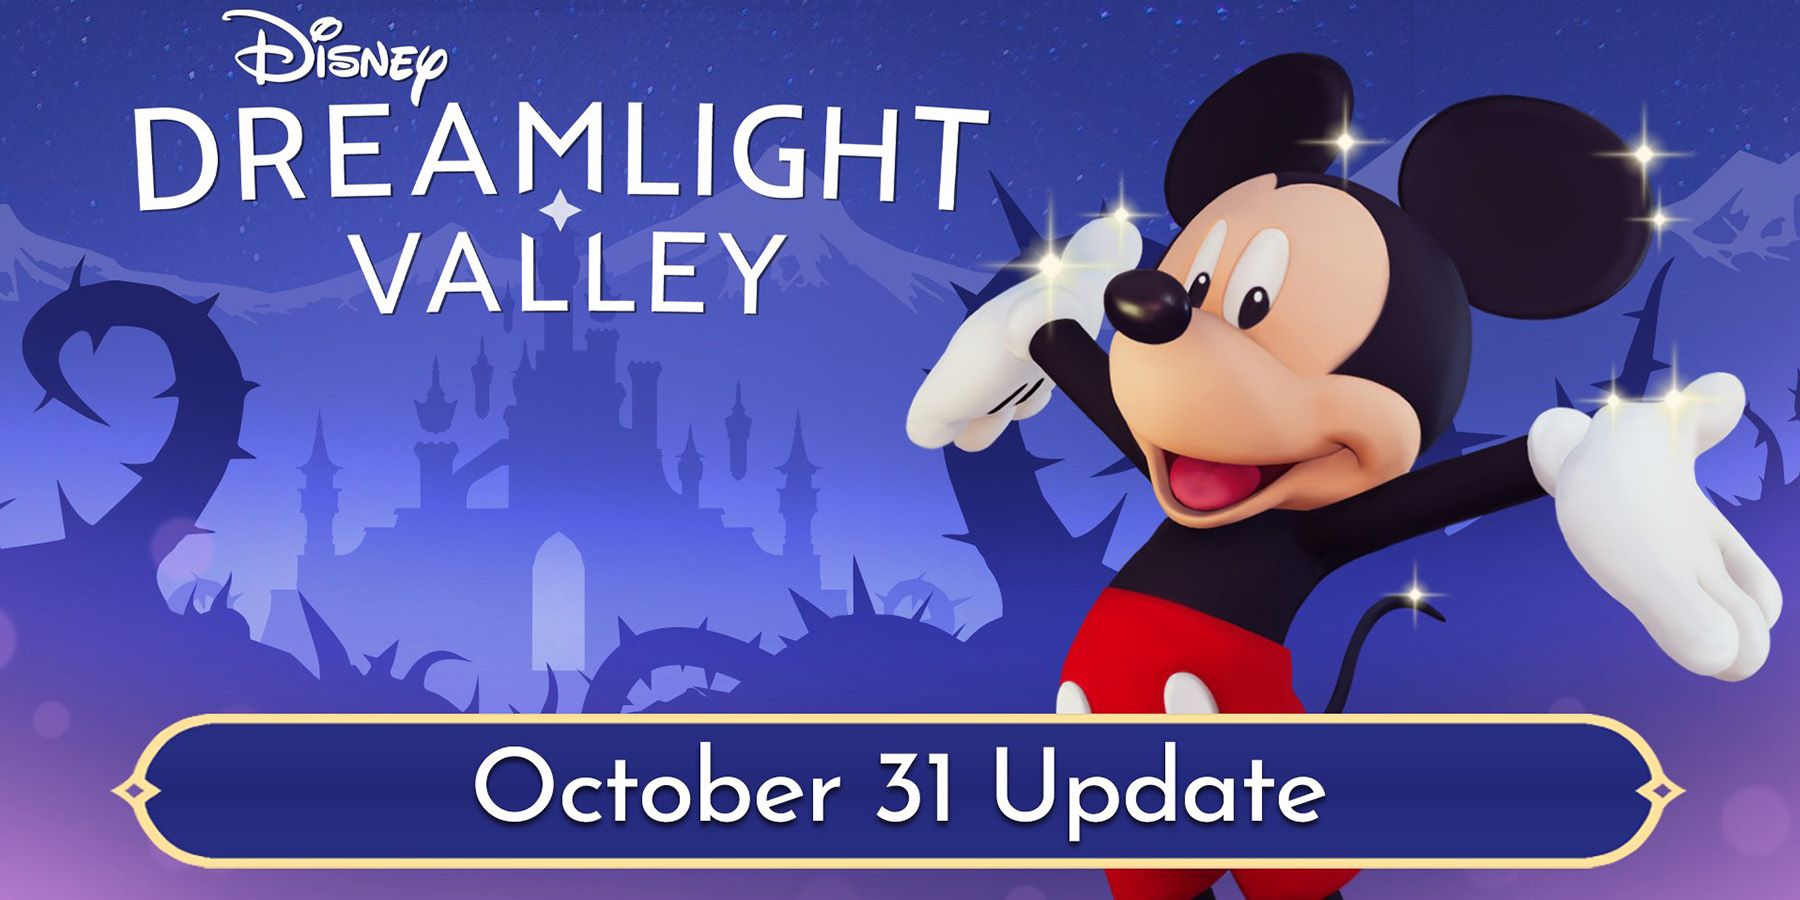 disney-dreamlight-valley-10-31-update